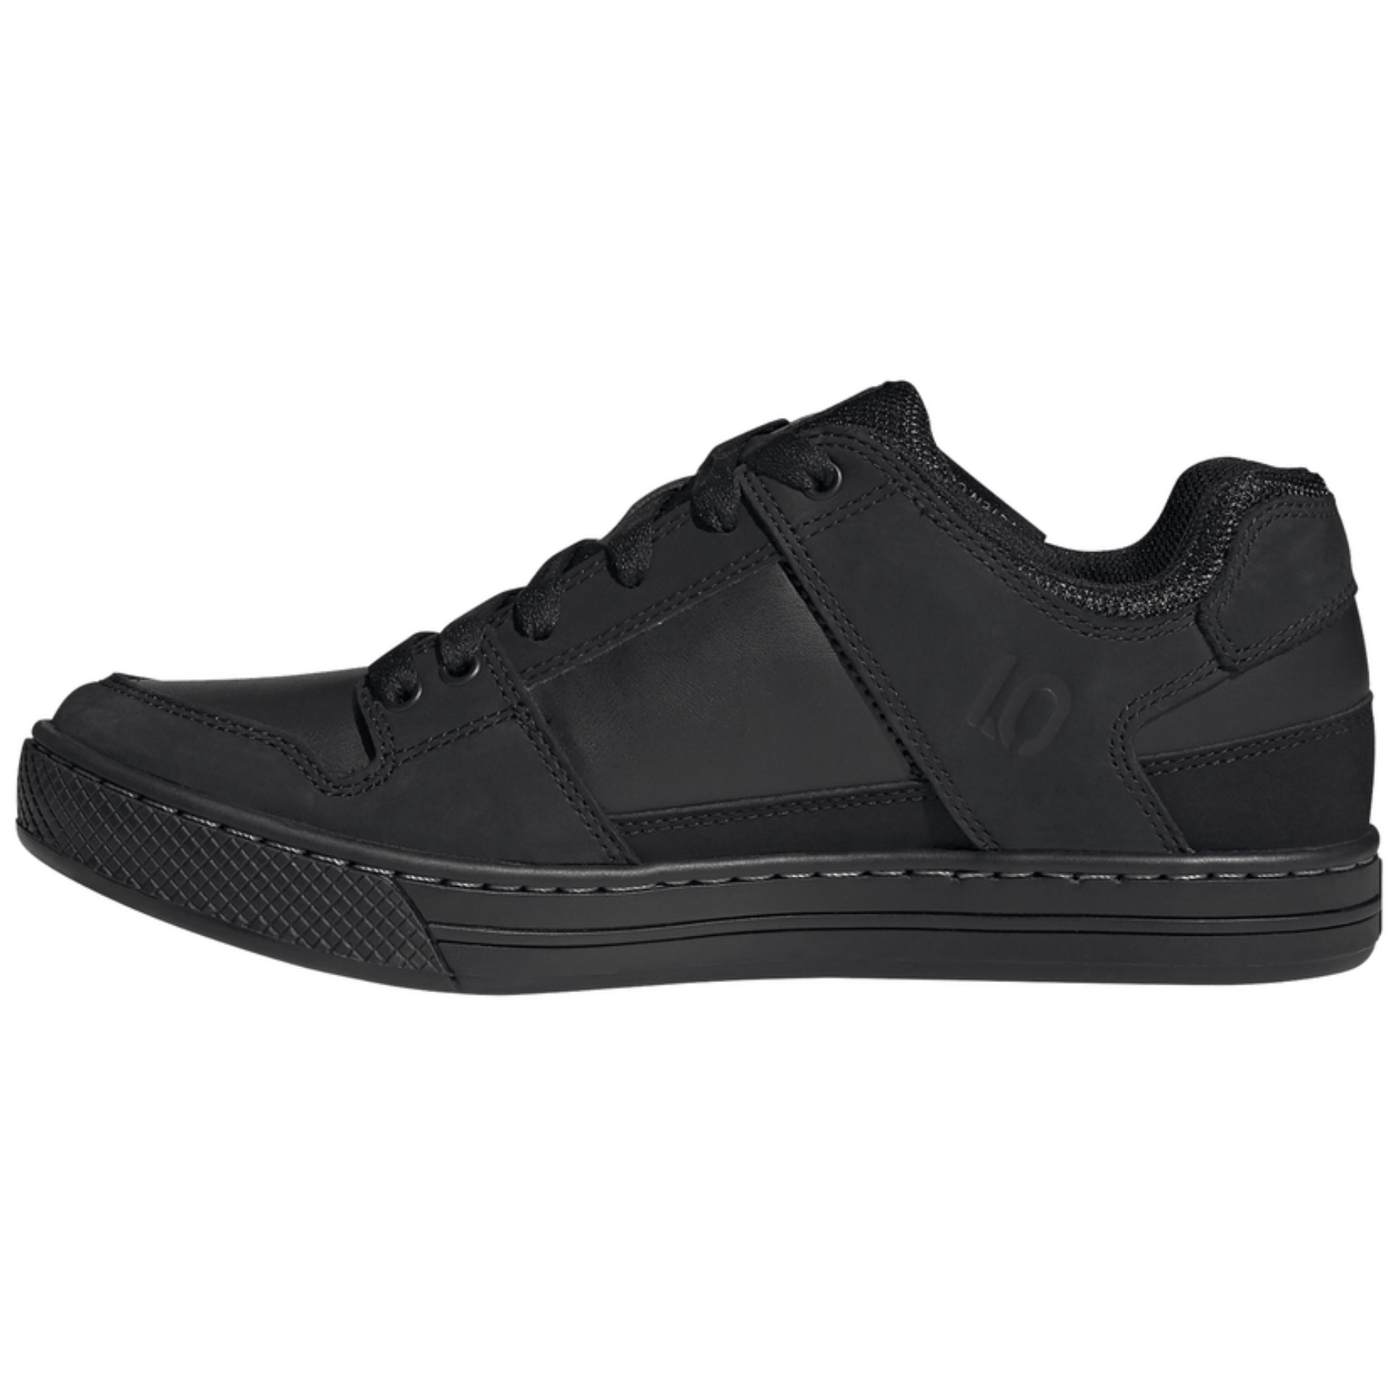 Velo Apavi Five Ten Shoes Freerider DLX - Core Black / Core Black / Grey Three